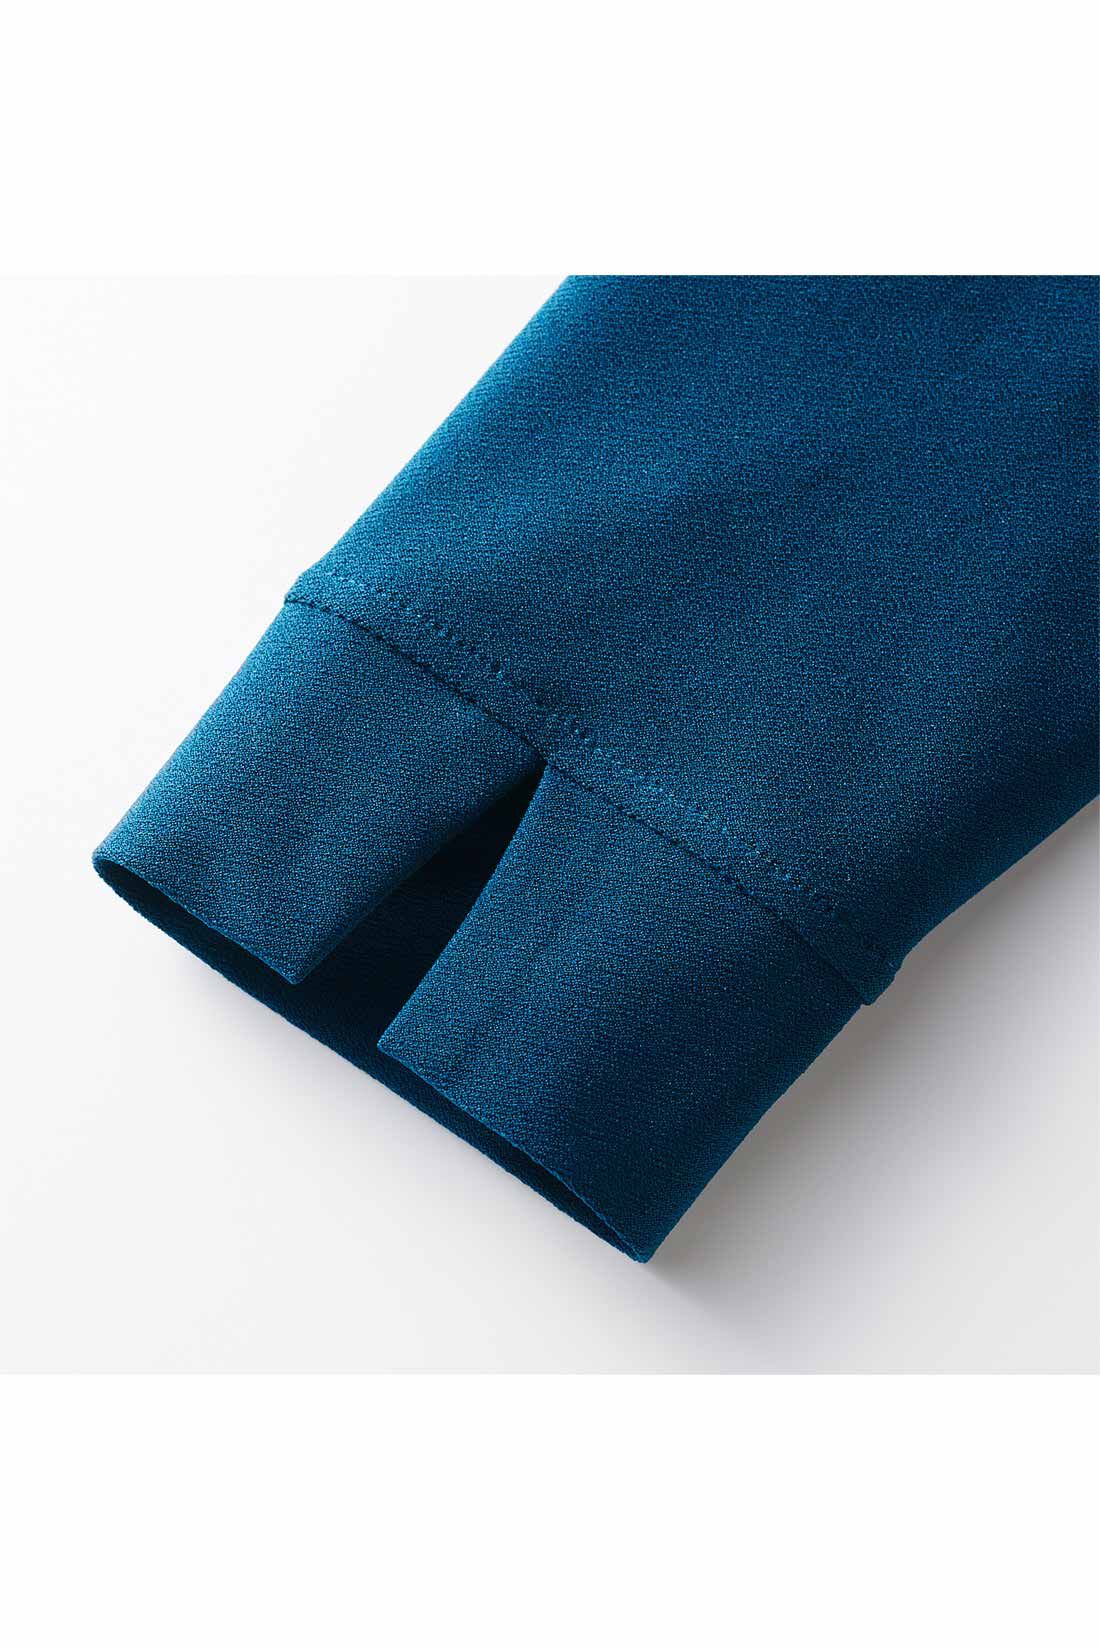 DRECO by IEDIT|【3～10日でお届け】IEDIT[イディット]　快適だけどきちんと見え 落ち感カットソー素材のプリーツスカート切り替えワンピース〈ブルーグリーン〉|袖口にスリットを入れてすっきりした印象に。